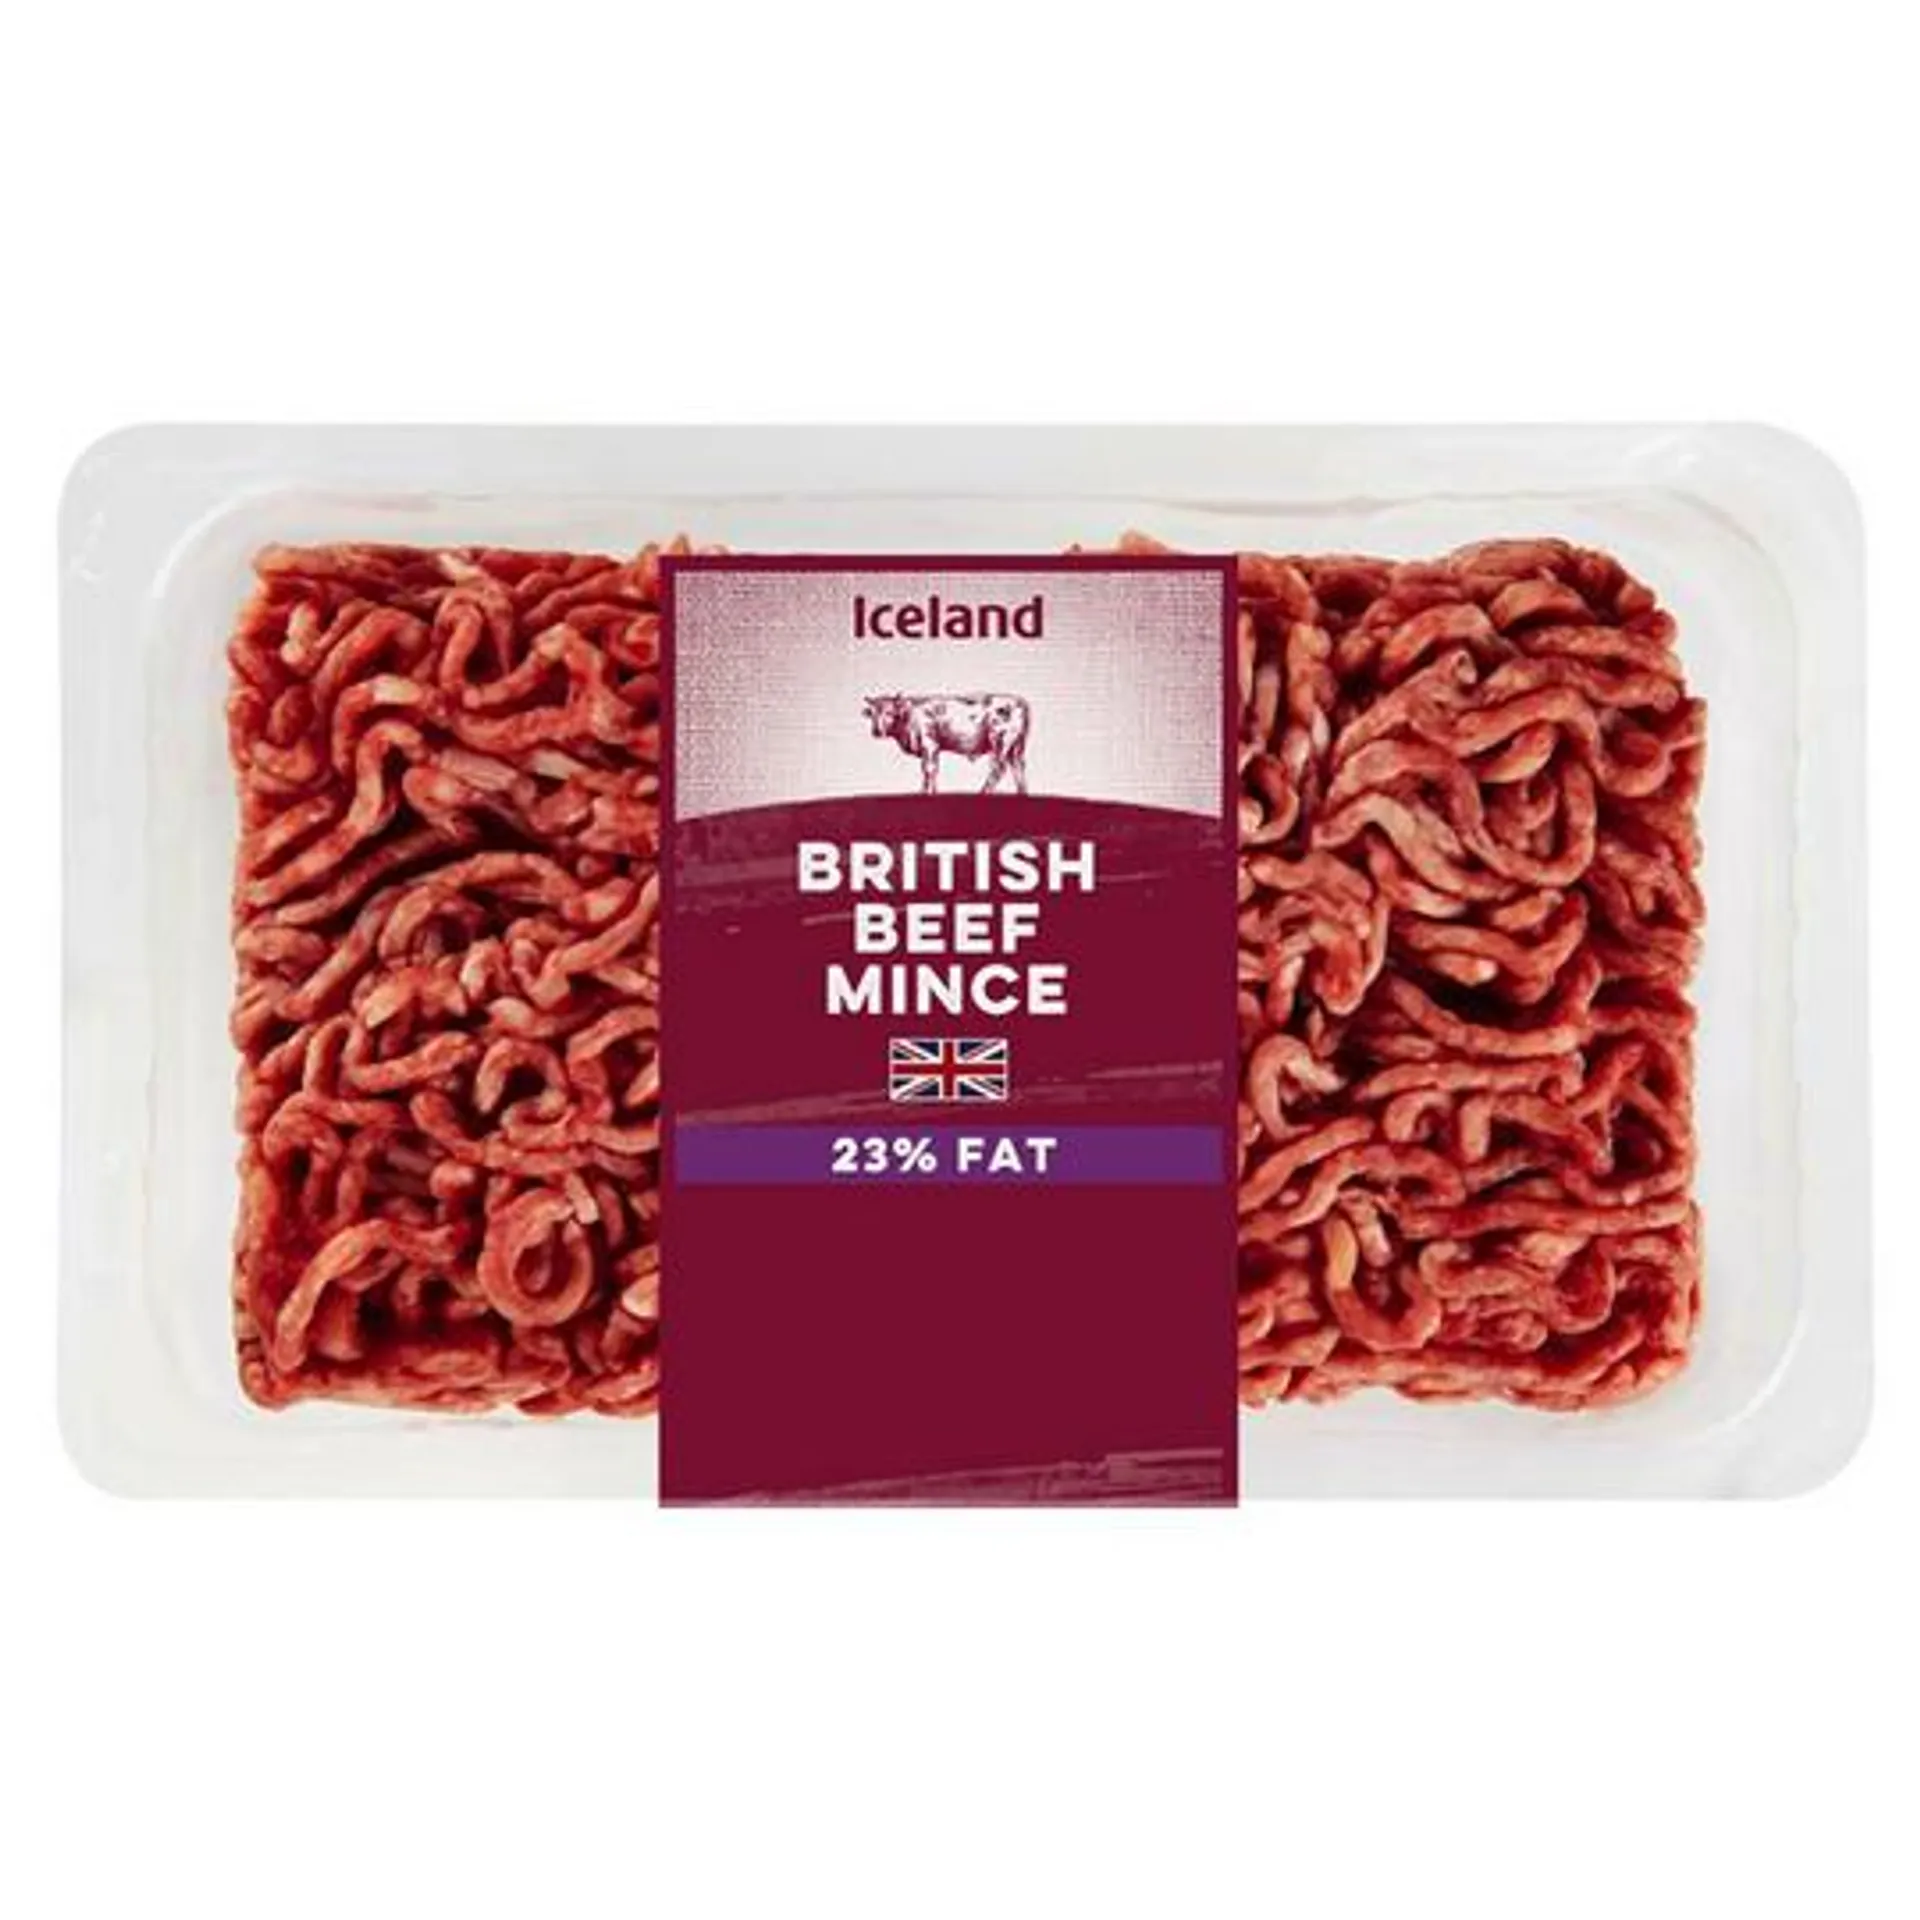 Iceland British Beef Mince 23% Fat 500g